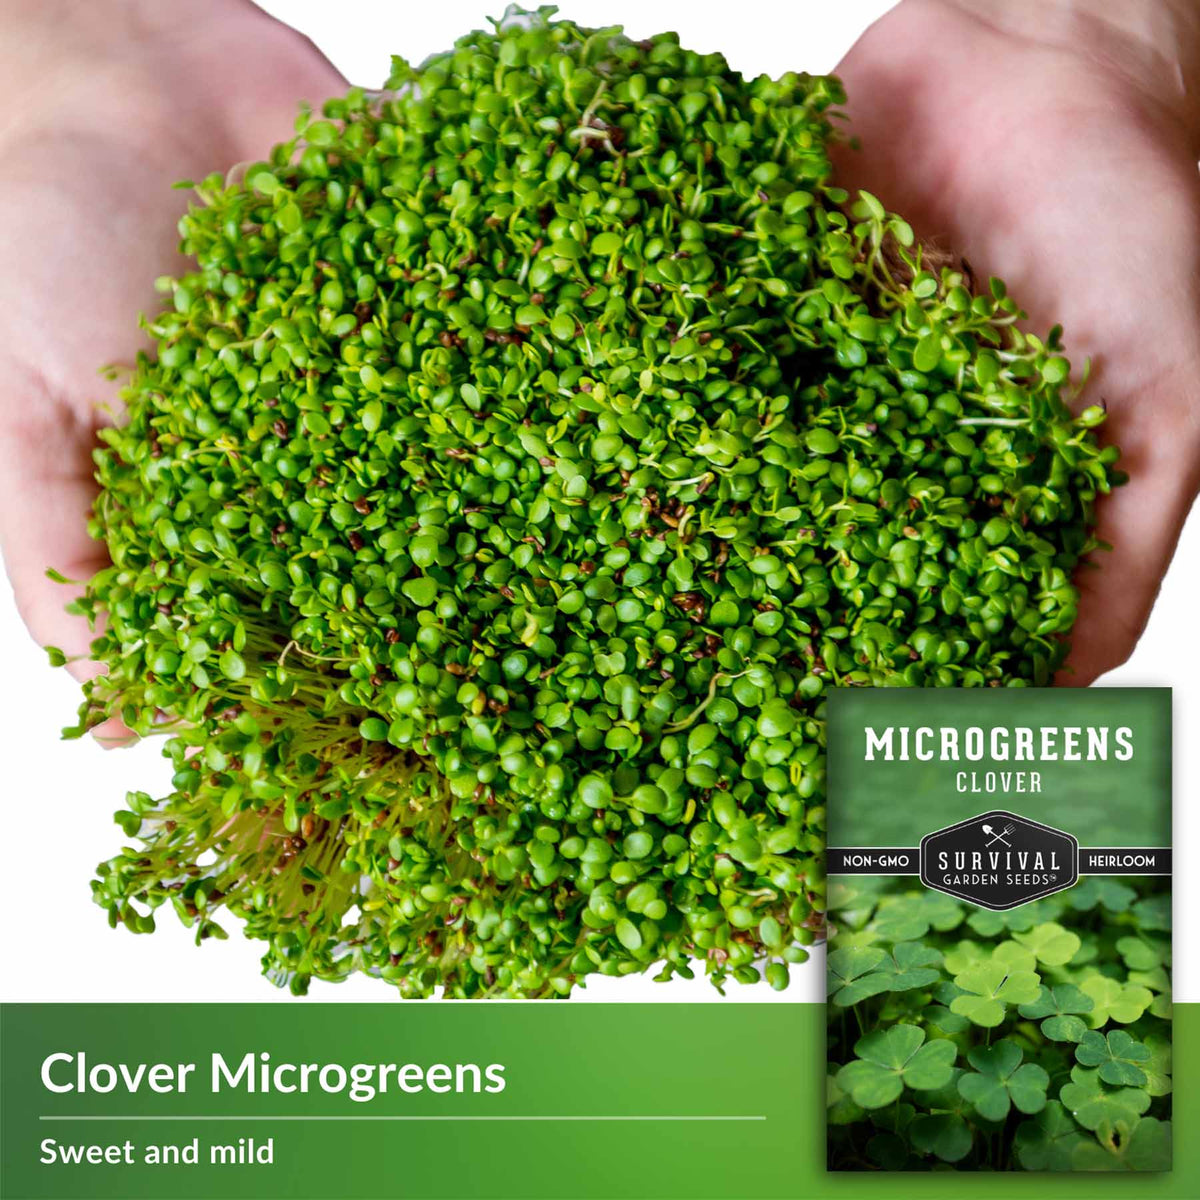 clover microgreens - sweet and mild